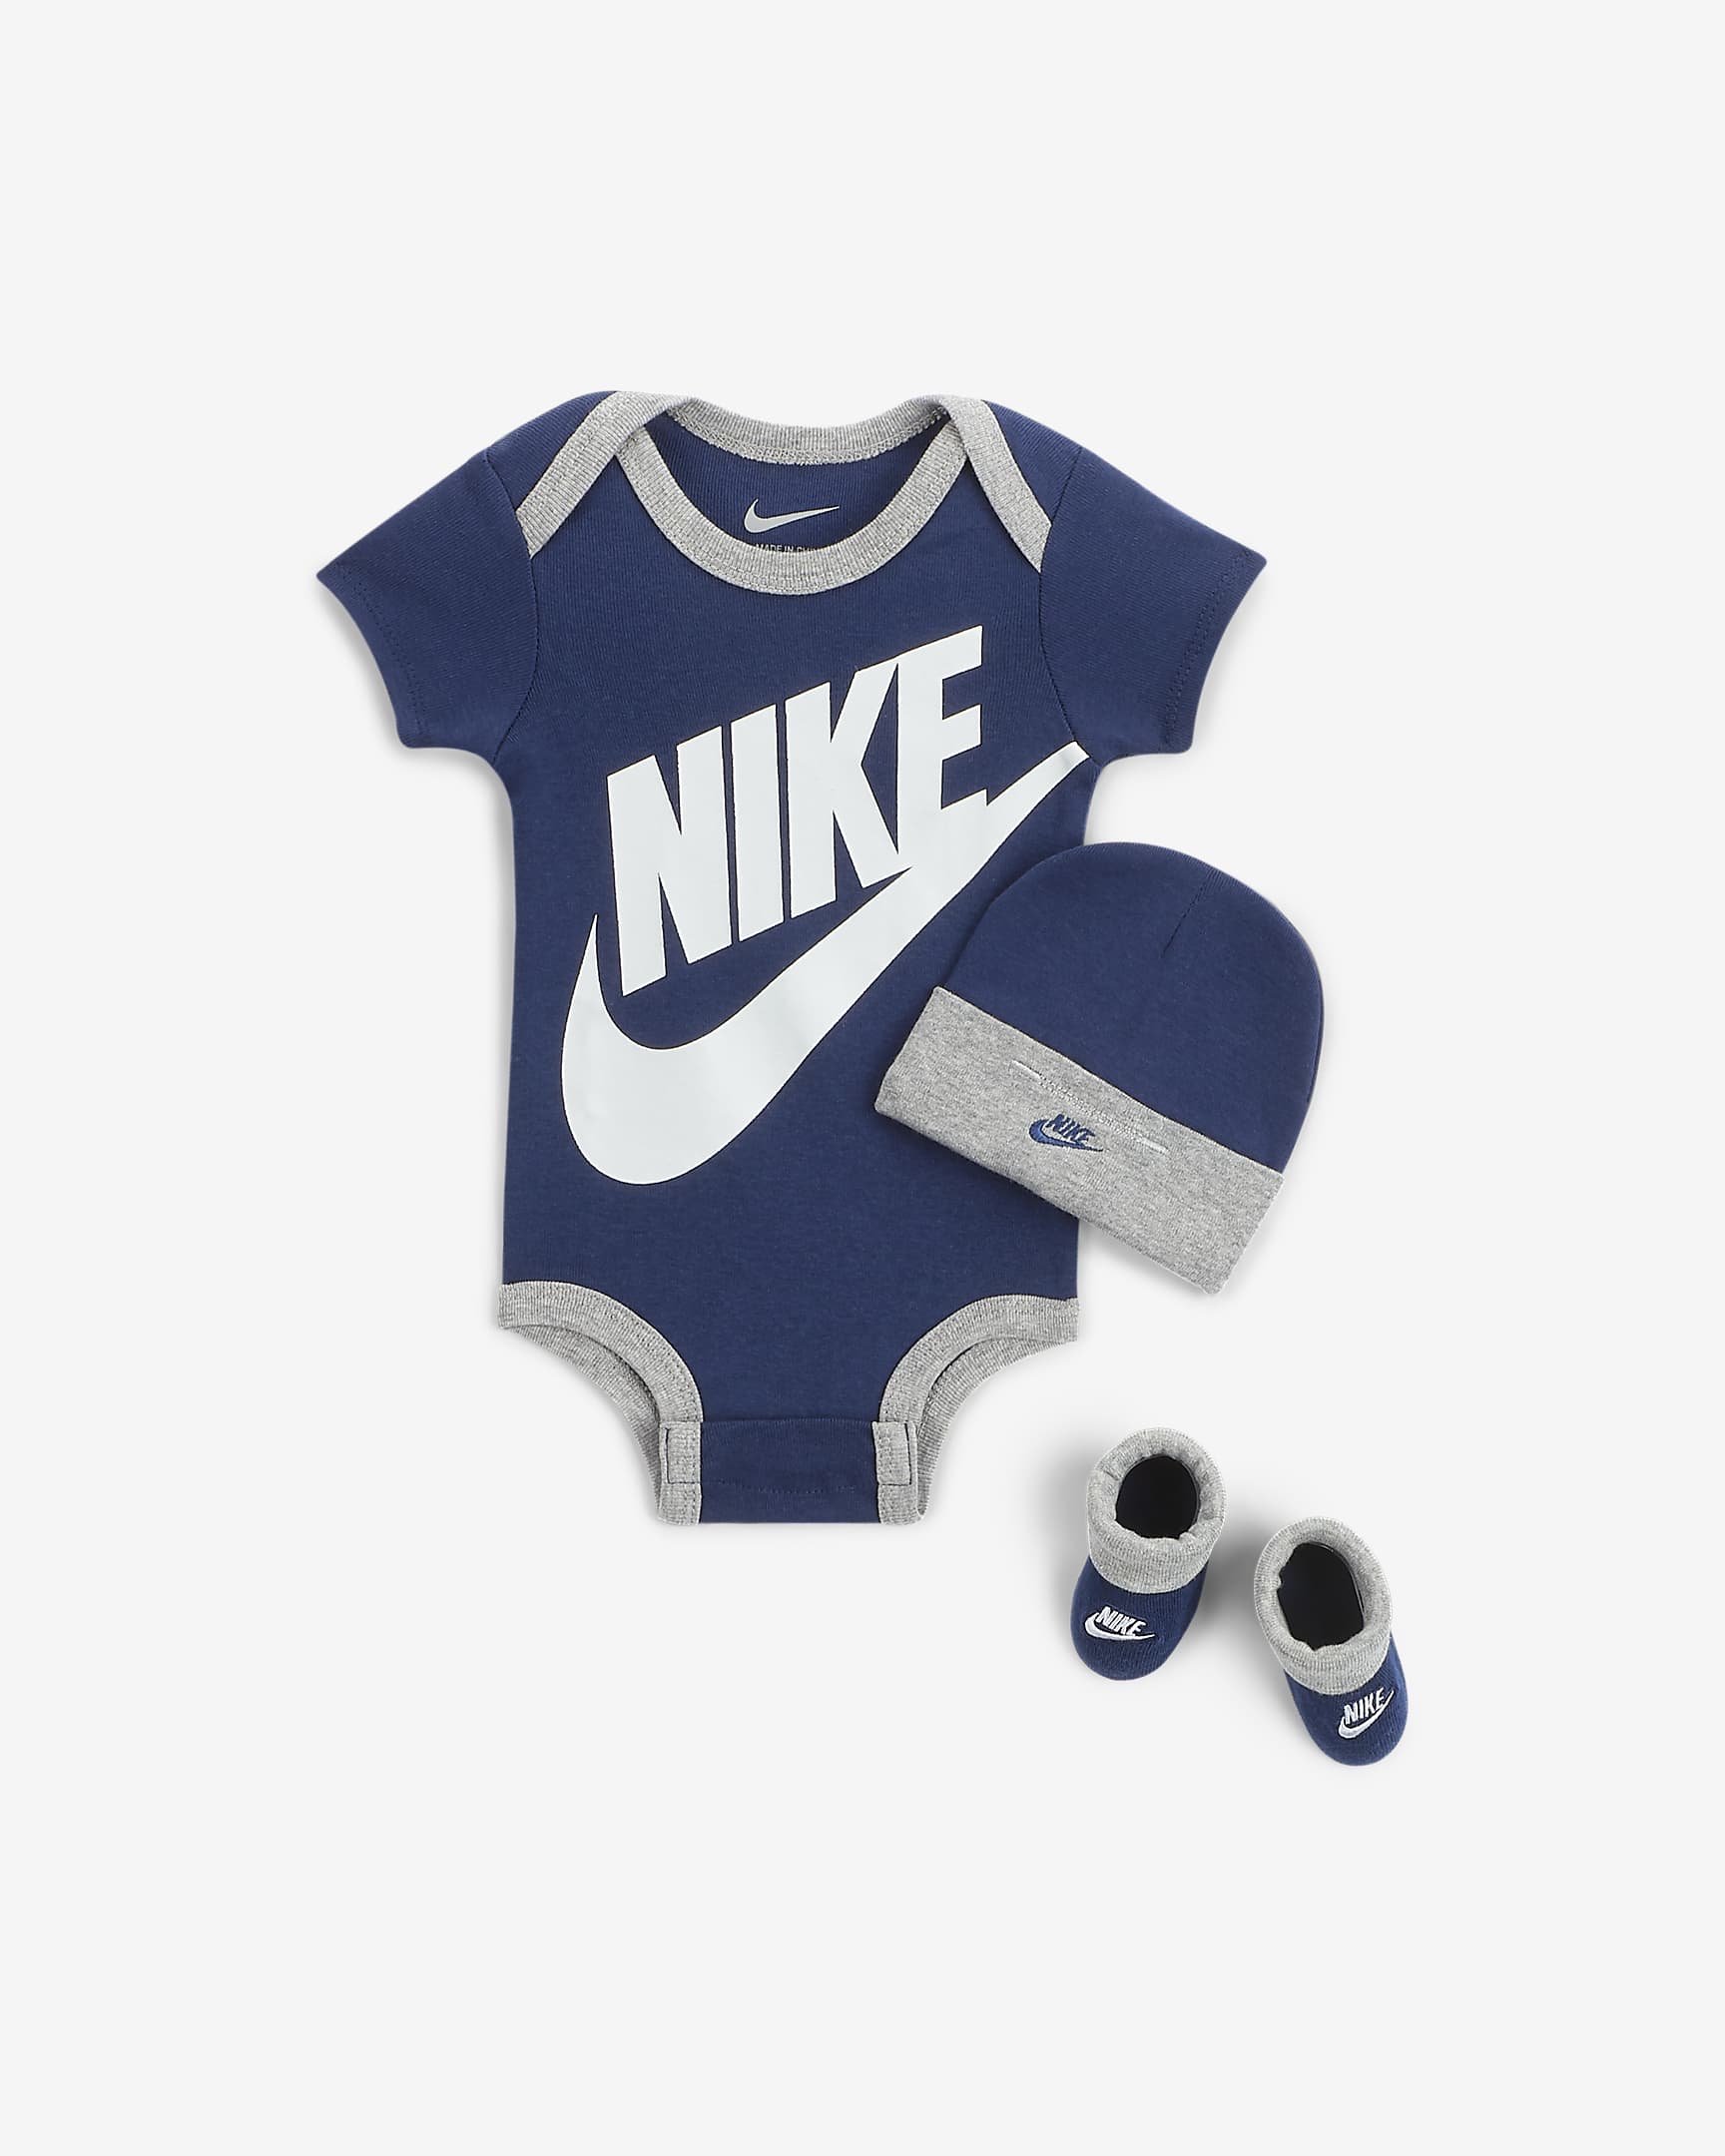 Nike coffret bébé Futura blue grey